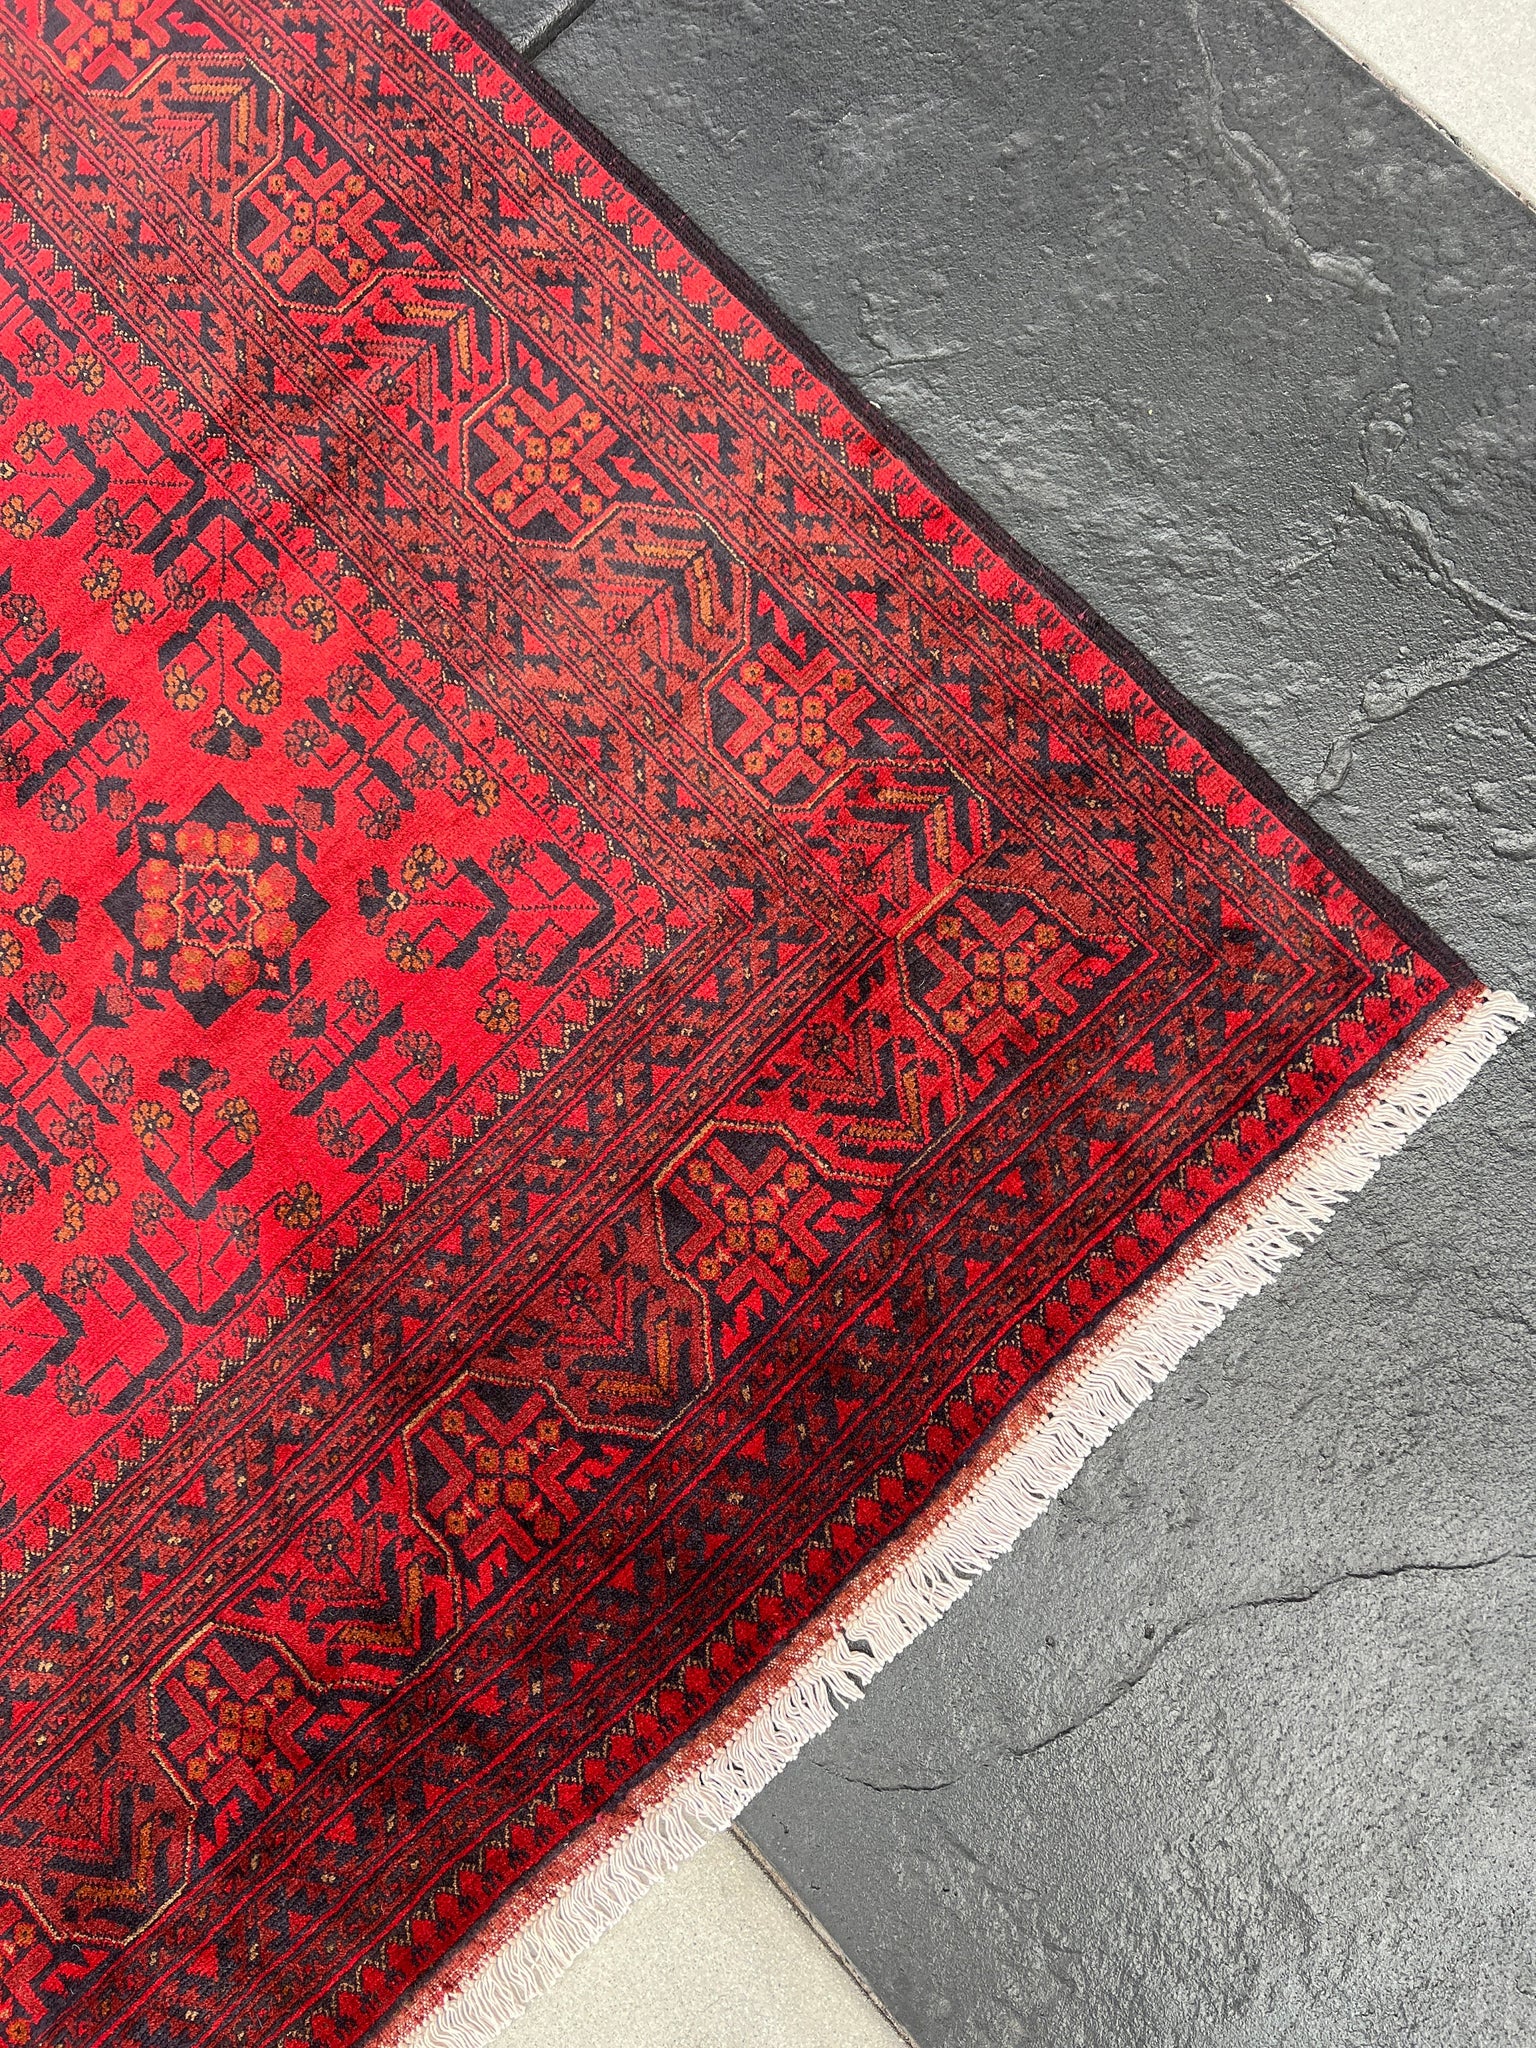 10x13 (305x365) Handmade Afghan Rug | Cherry Red Brick Red Black Burnt Orange Brown White | Heriz Turkish Hand Knotted Oushak Oriental Wool